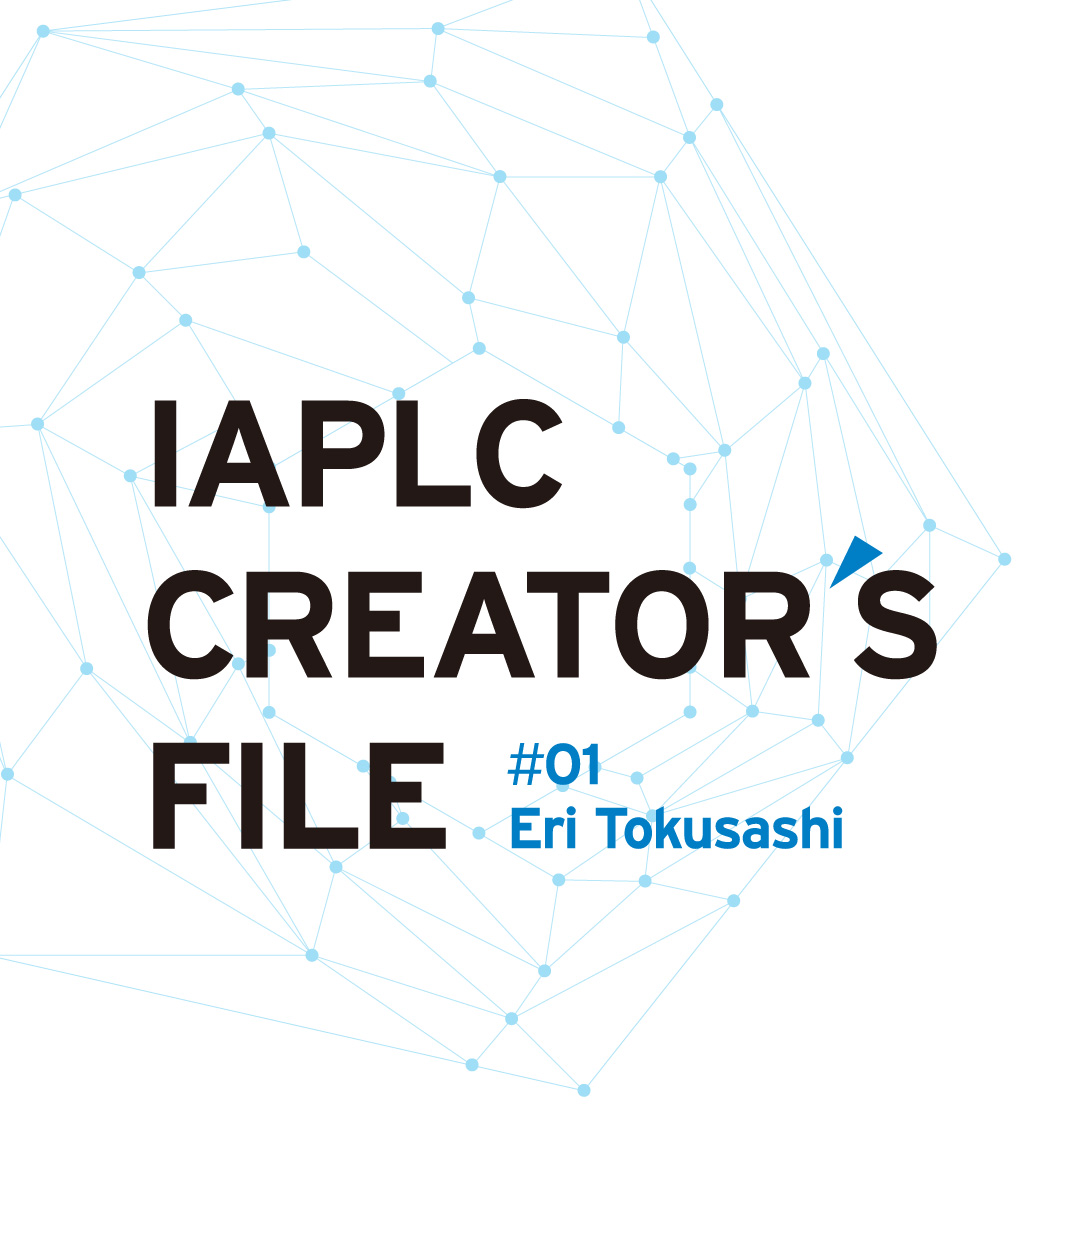 IAPLC CREATOR’S FILE #01 徳差 江里